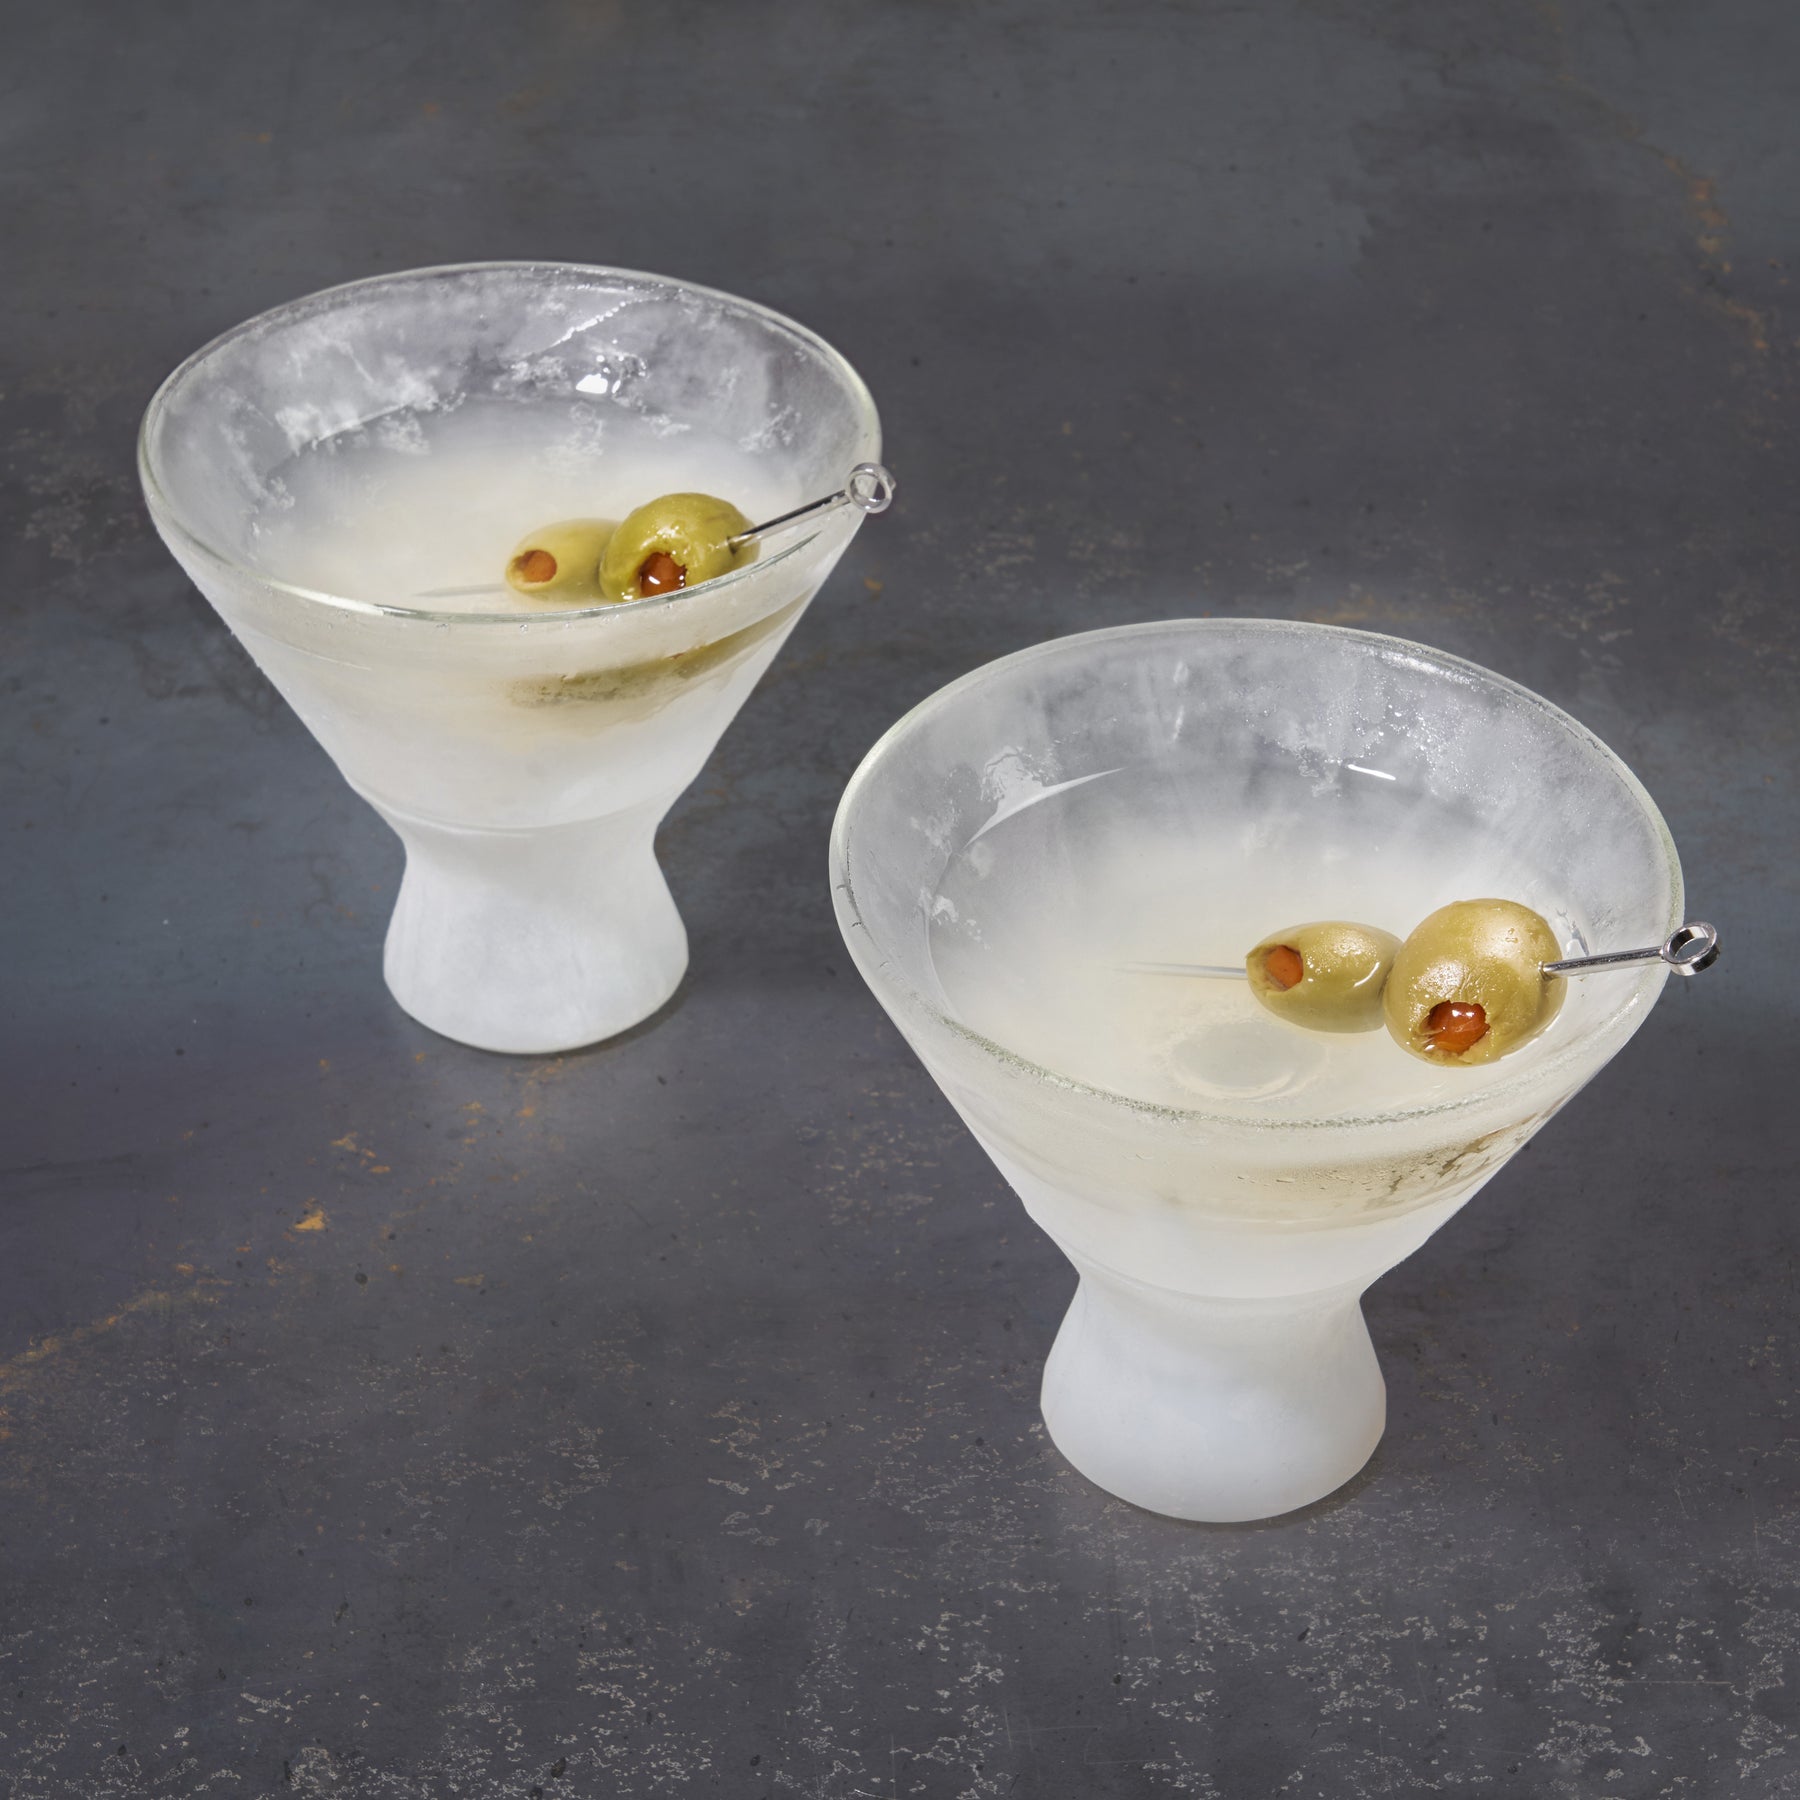 Host Freeze Insulated Martini Cocktail Glasses, Freezer Gel